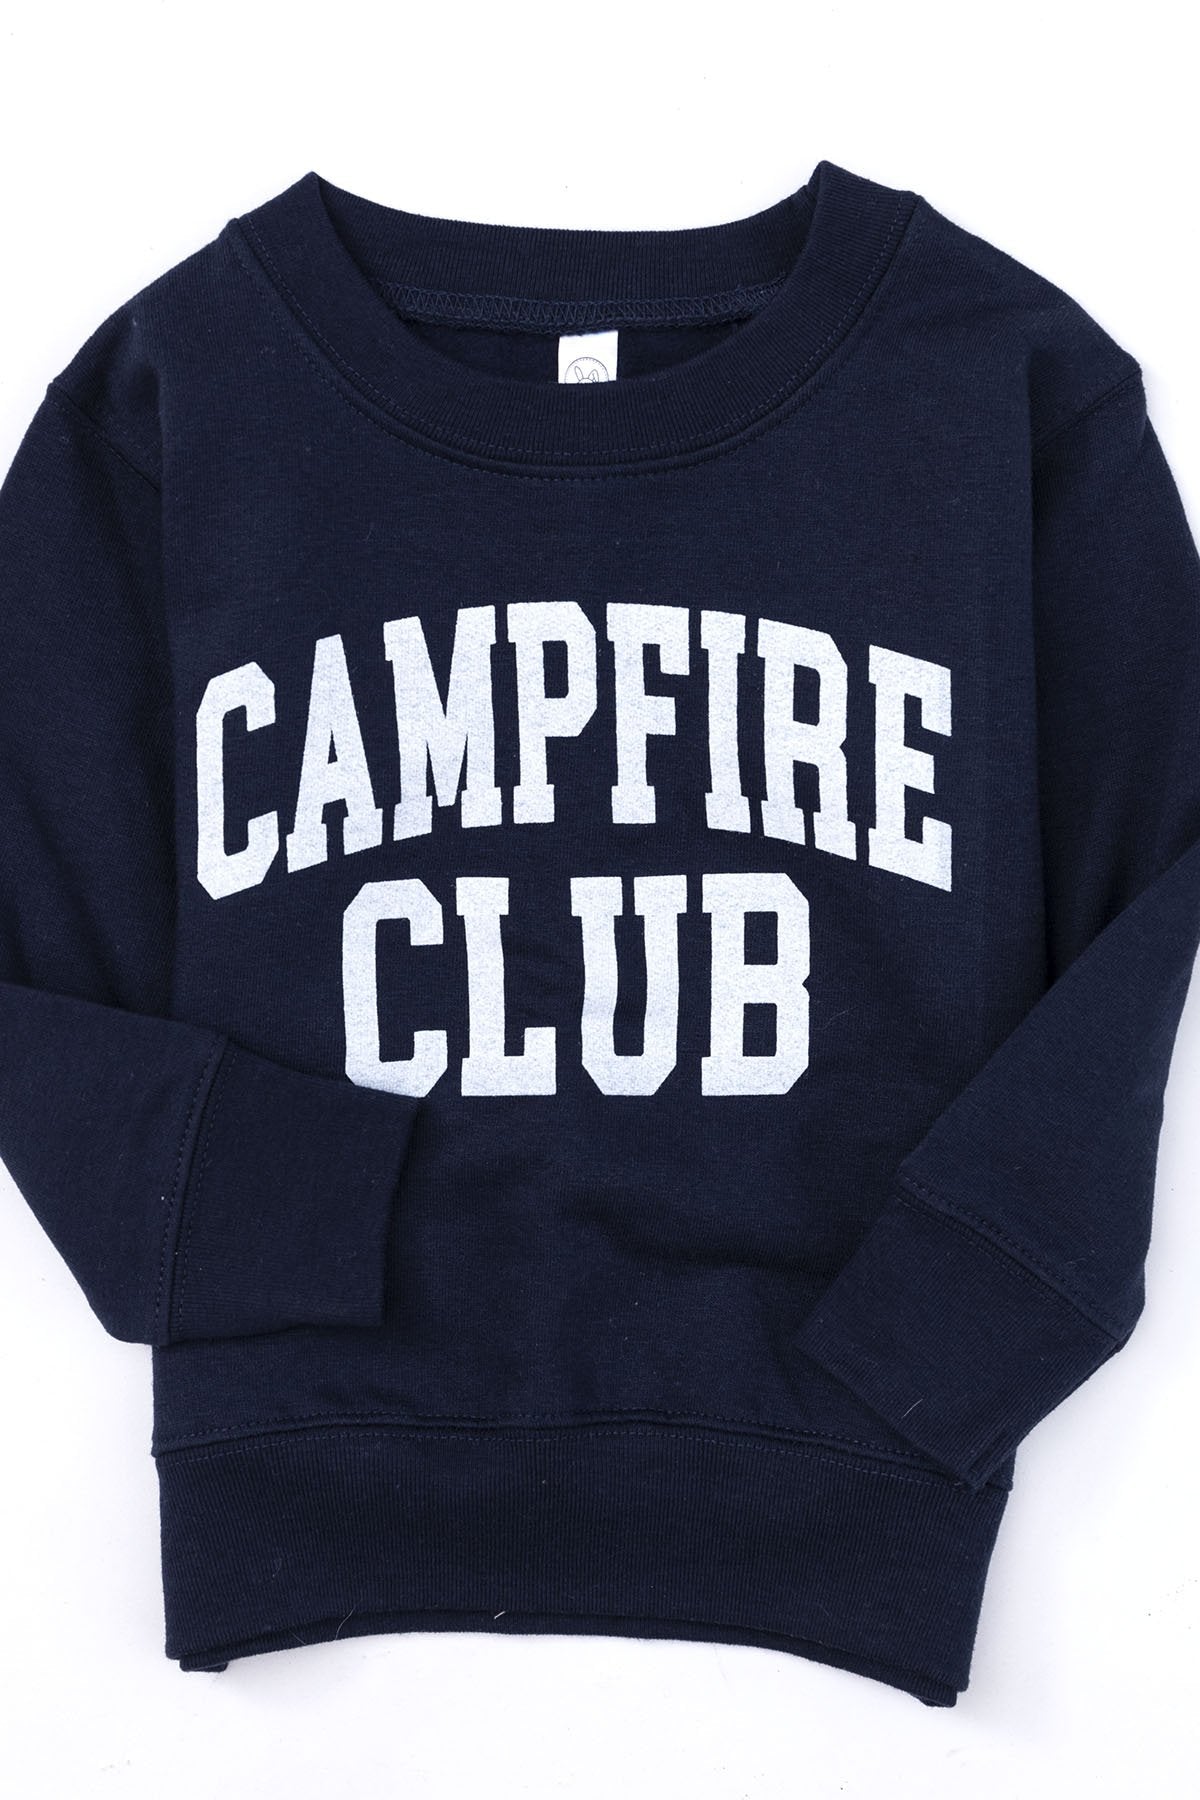 Campfire Club Navy Toddler Graphic Sweatshirt